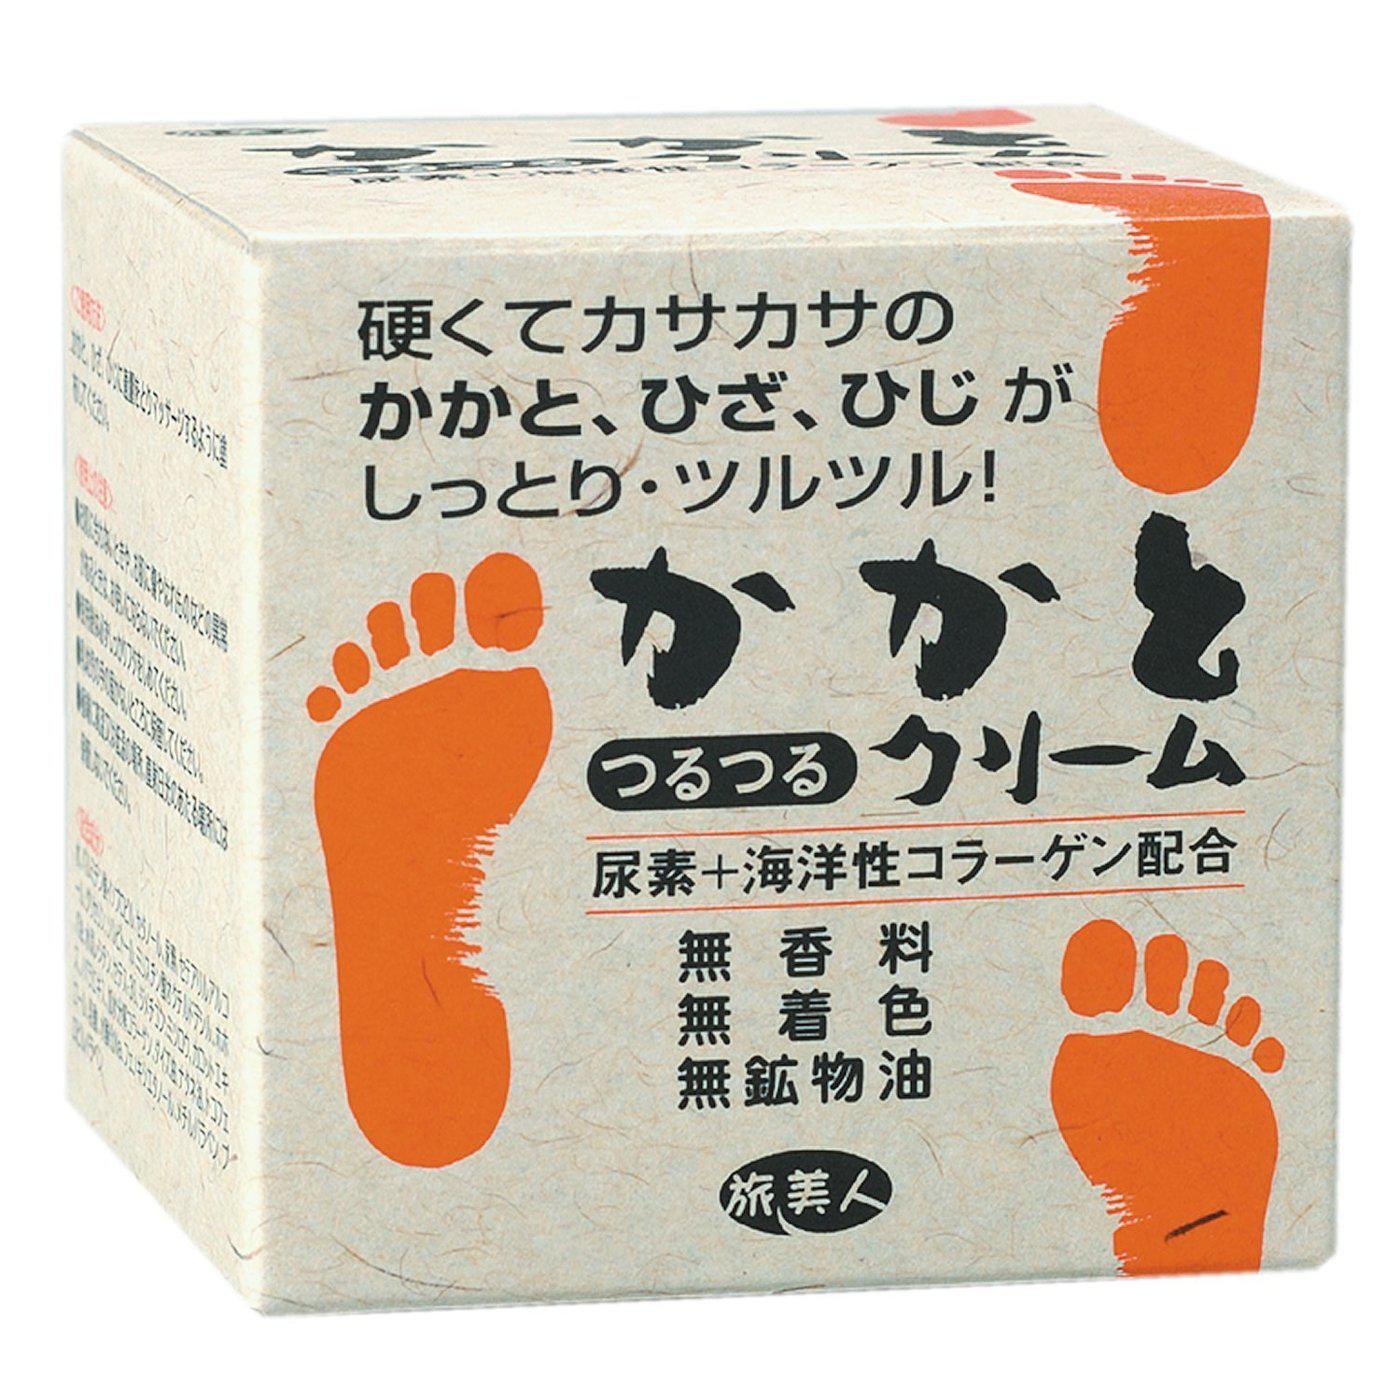 Azuma Tabibijin Kakato Foot Cream 100g - YOYO JAPAN